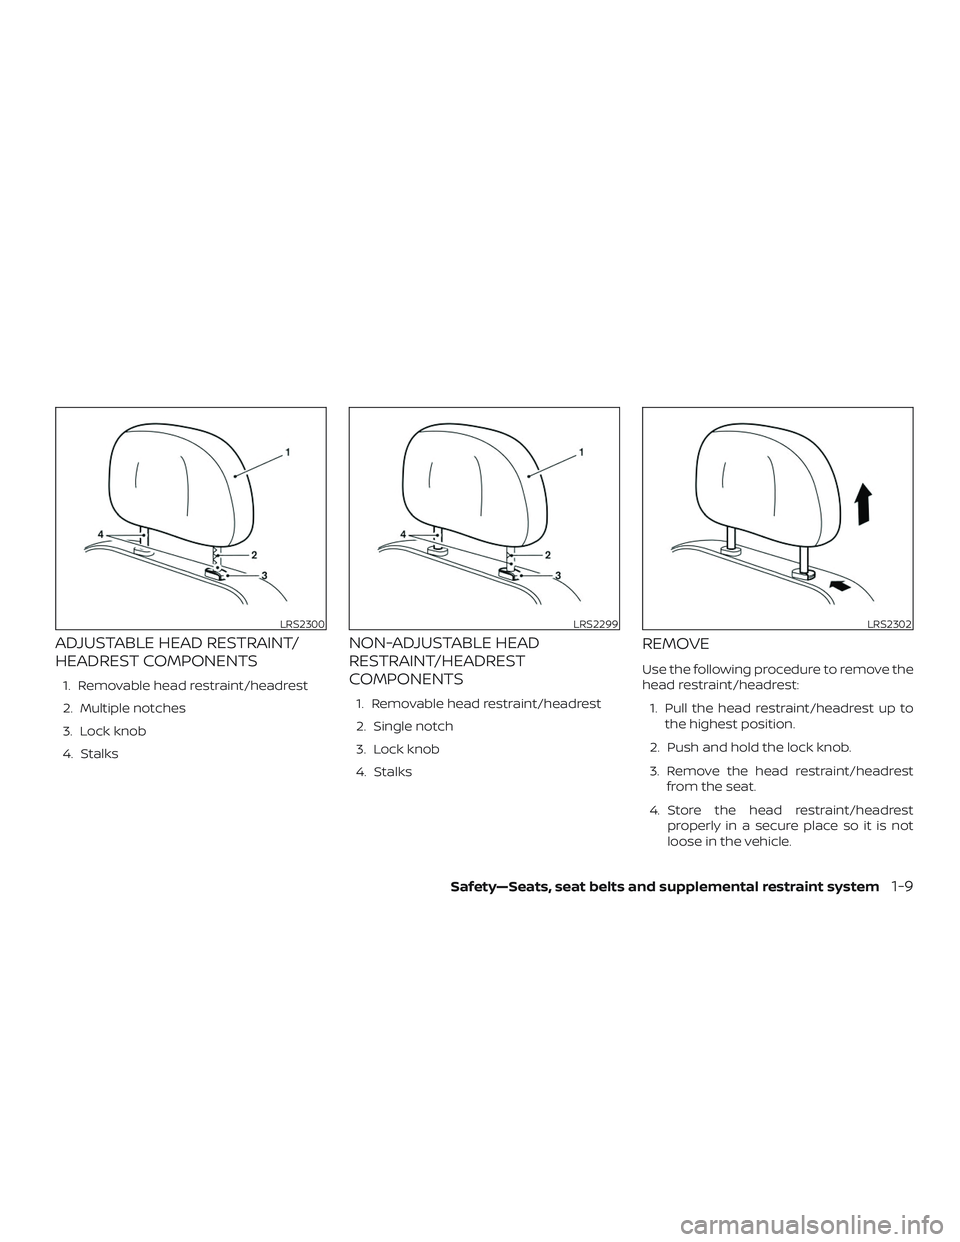 NISSAN ALTIMA 2018  Owner´s Manual ADJUSTABLE HEAD RESTRAINT/
HEADREST COMPONENTS
1. Removable head restraint/headrest
2. Multiple notches
3. Lock knob
4. Stalks
NON-ADJUSTABLE HEAD
RESTRAINT/HEADREST
COMPONENTS
1. Removable head restr